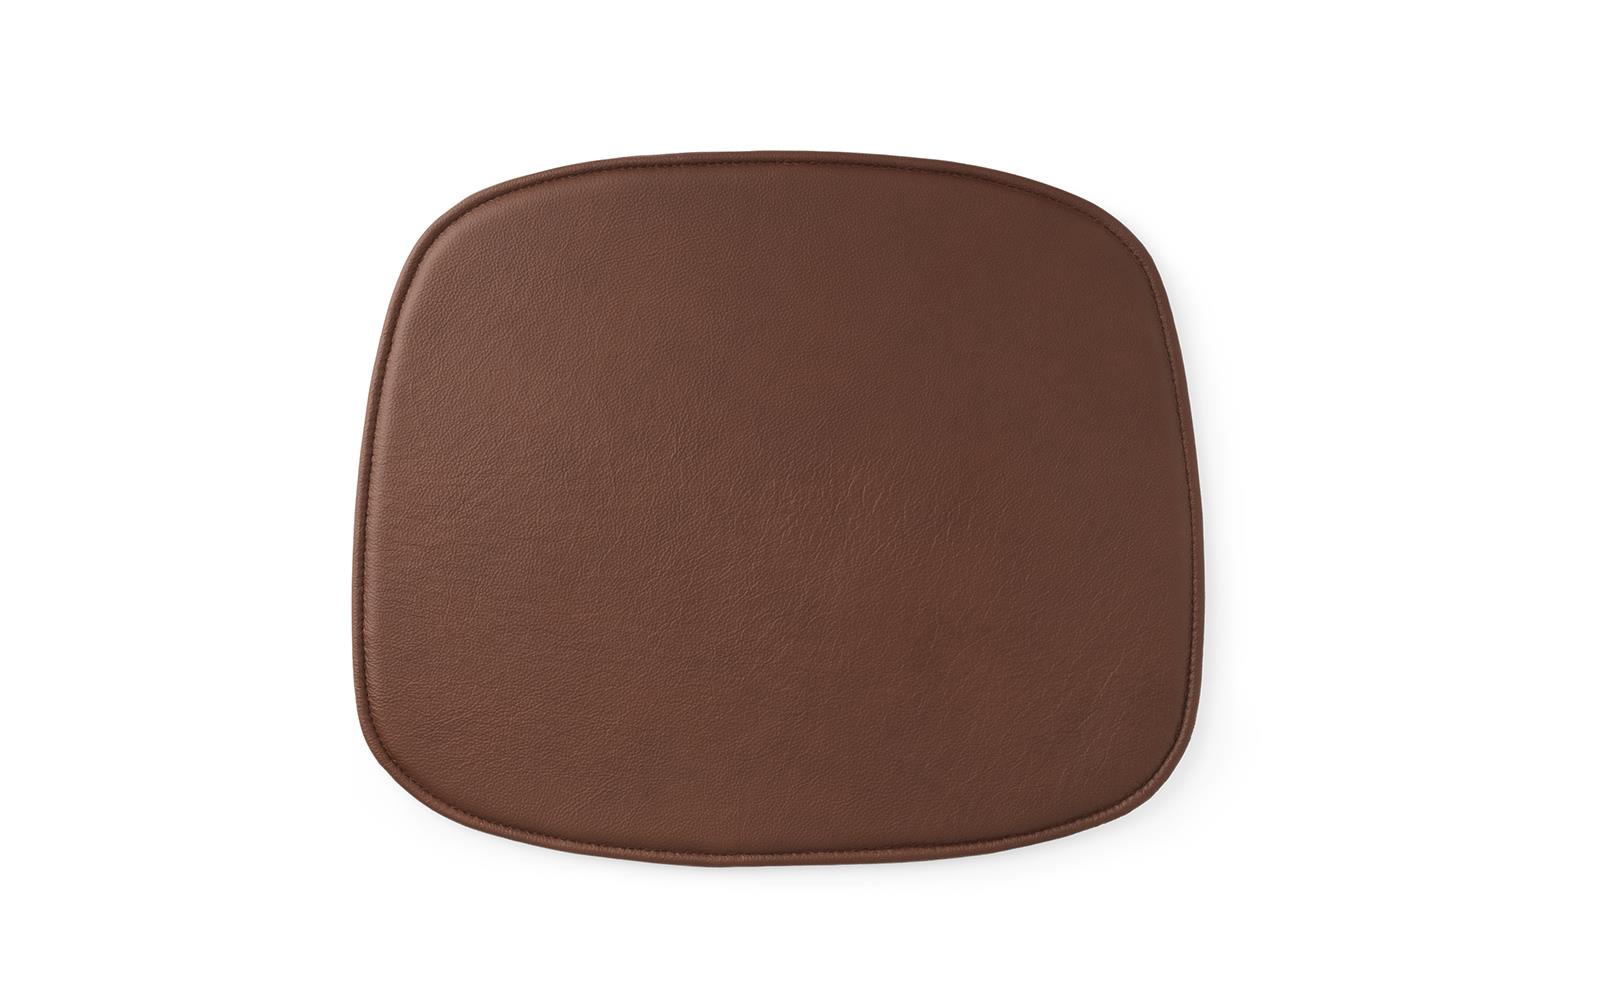 https://www.normann-copenhagen.com/-/media/Product-Pictures-Podio/Normann-Copenhagen/Form/Form-Seat-Cushion/Form-Seat-Cushion-Leather/602637/Seat-Cushion-Form-Leather1.png?rev=6dcabf6cb7954b19948b68467b8e8d24